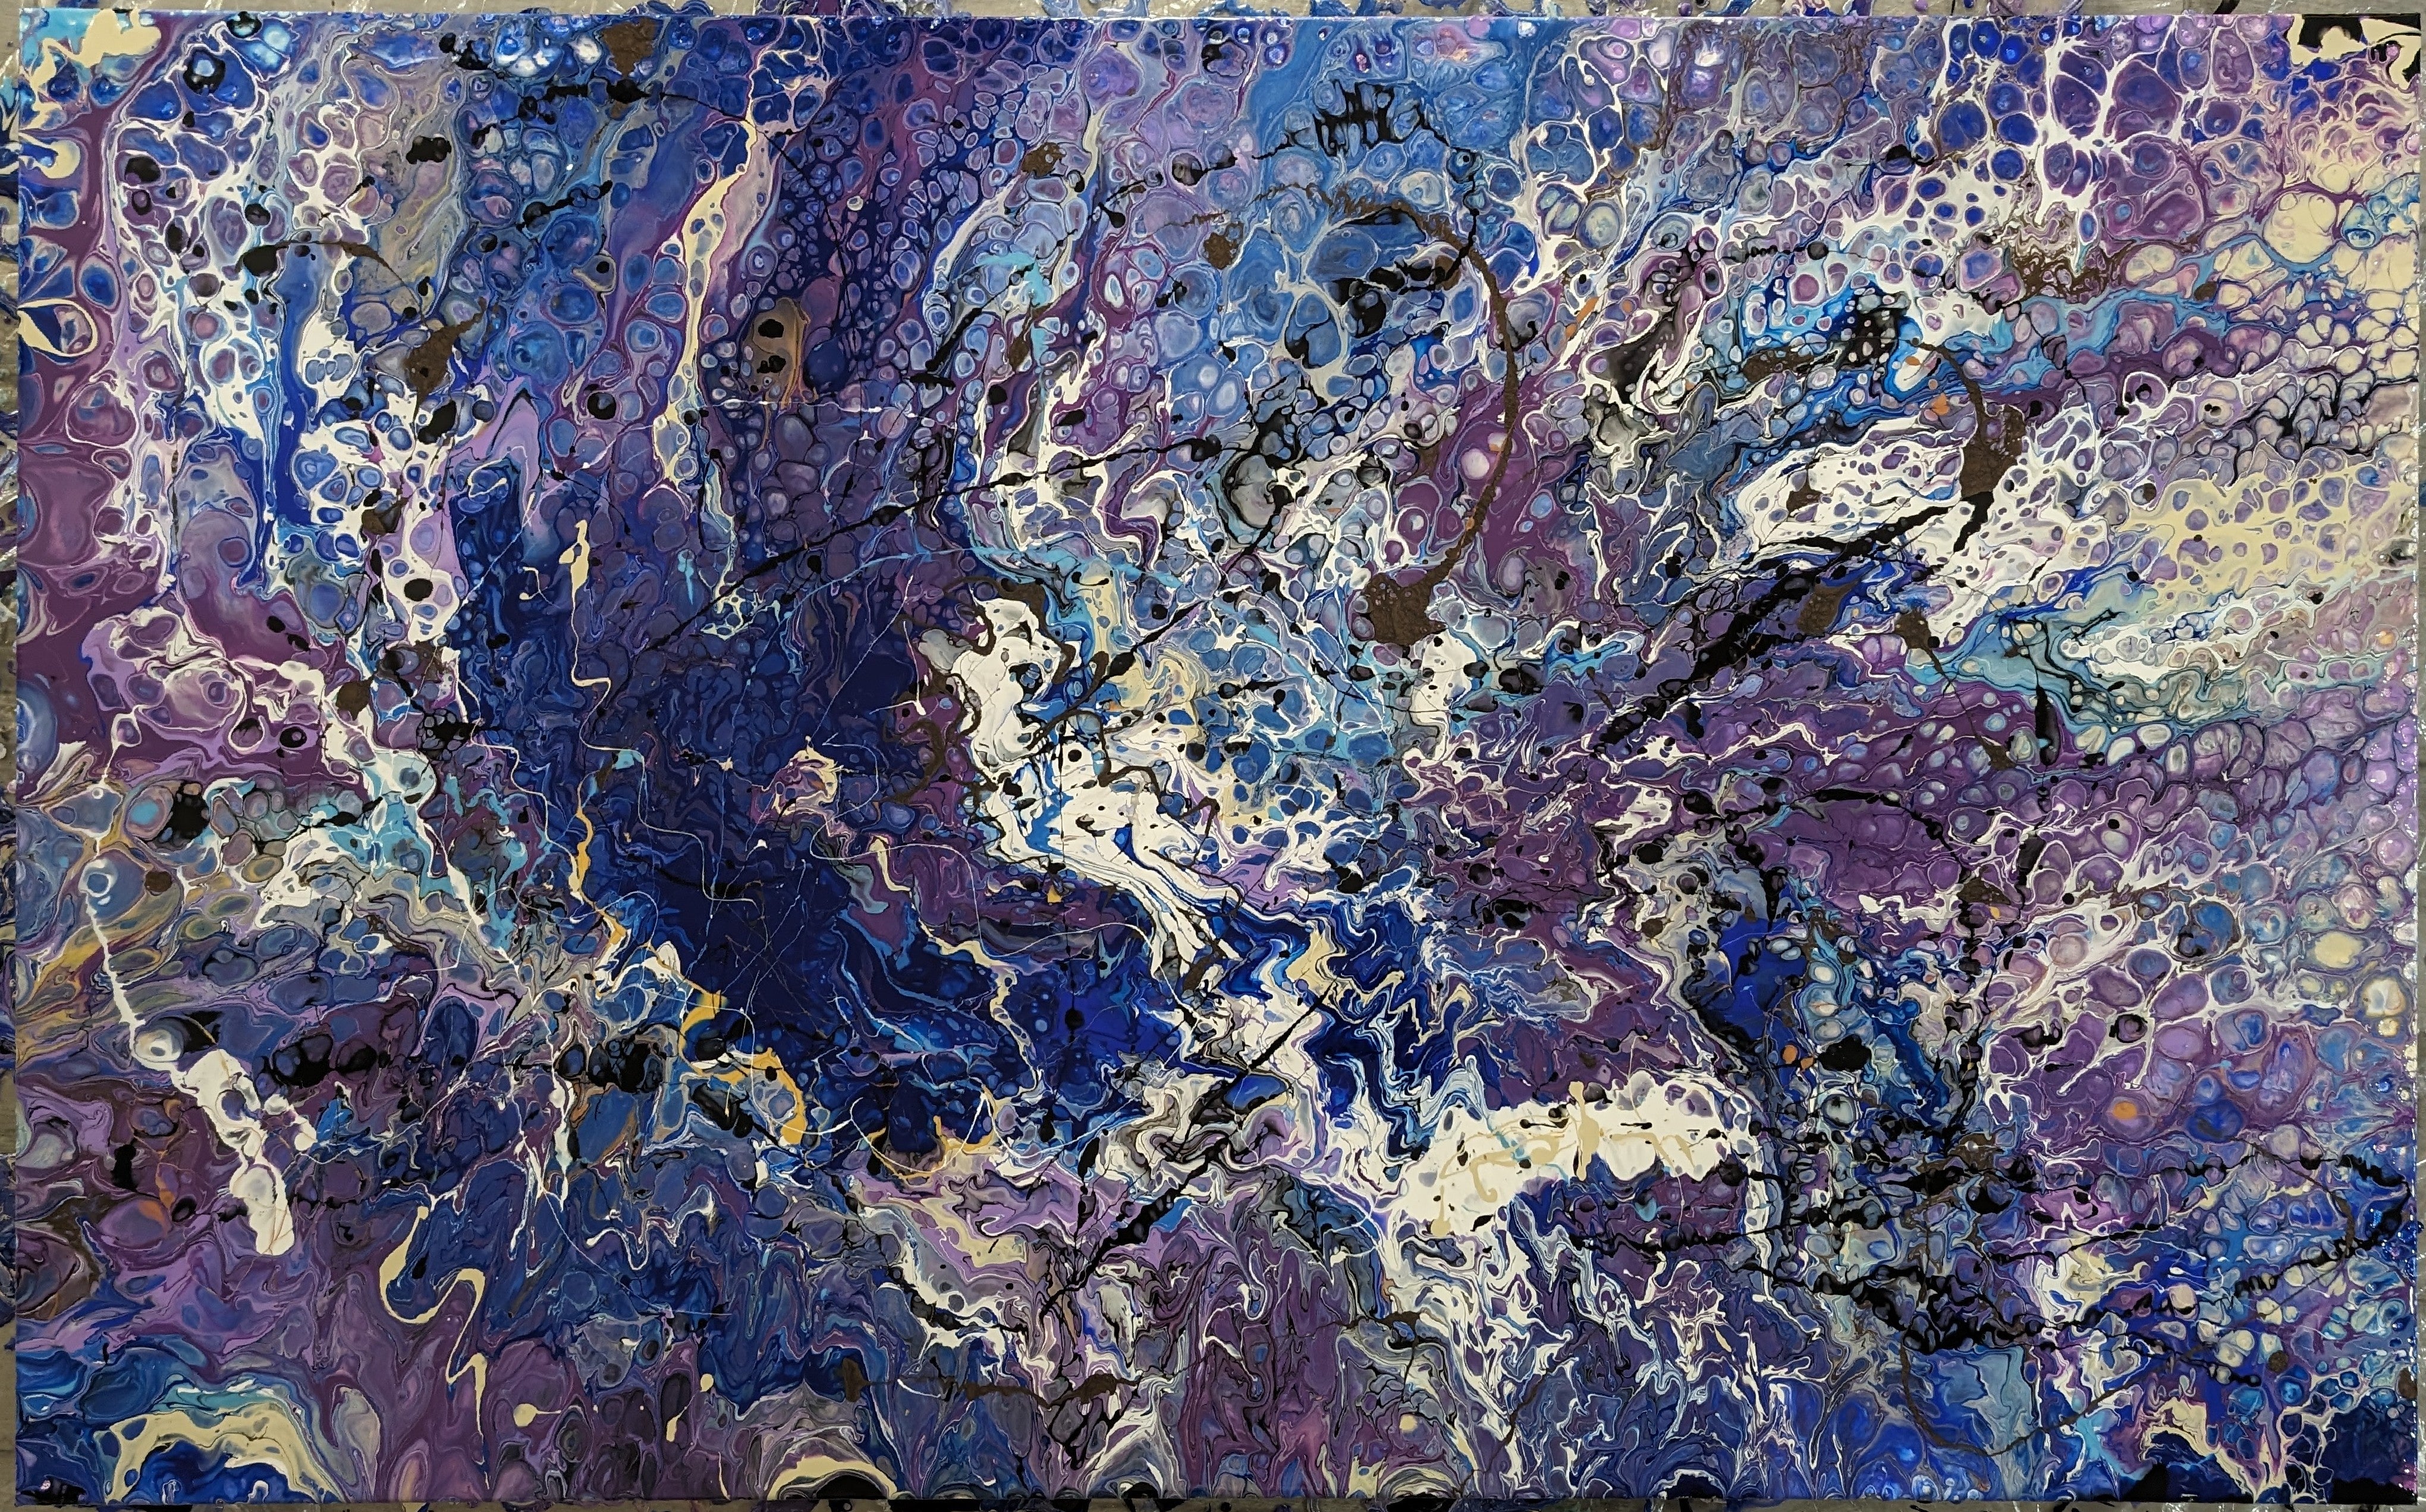 30x48 Original Abstract Canvas Art Acrylic Pour Painting "Lavender Haze" / Original Acrylic Painting / Abstract Painting / Fluid Art